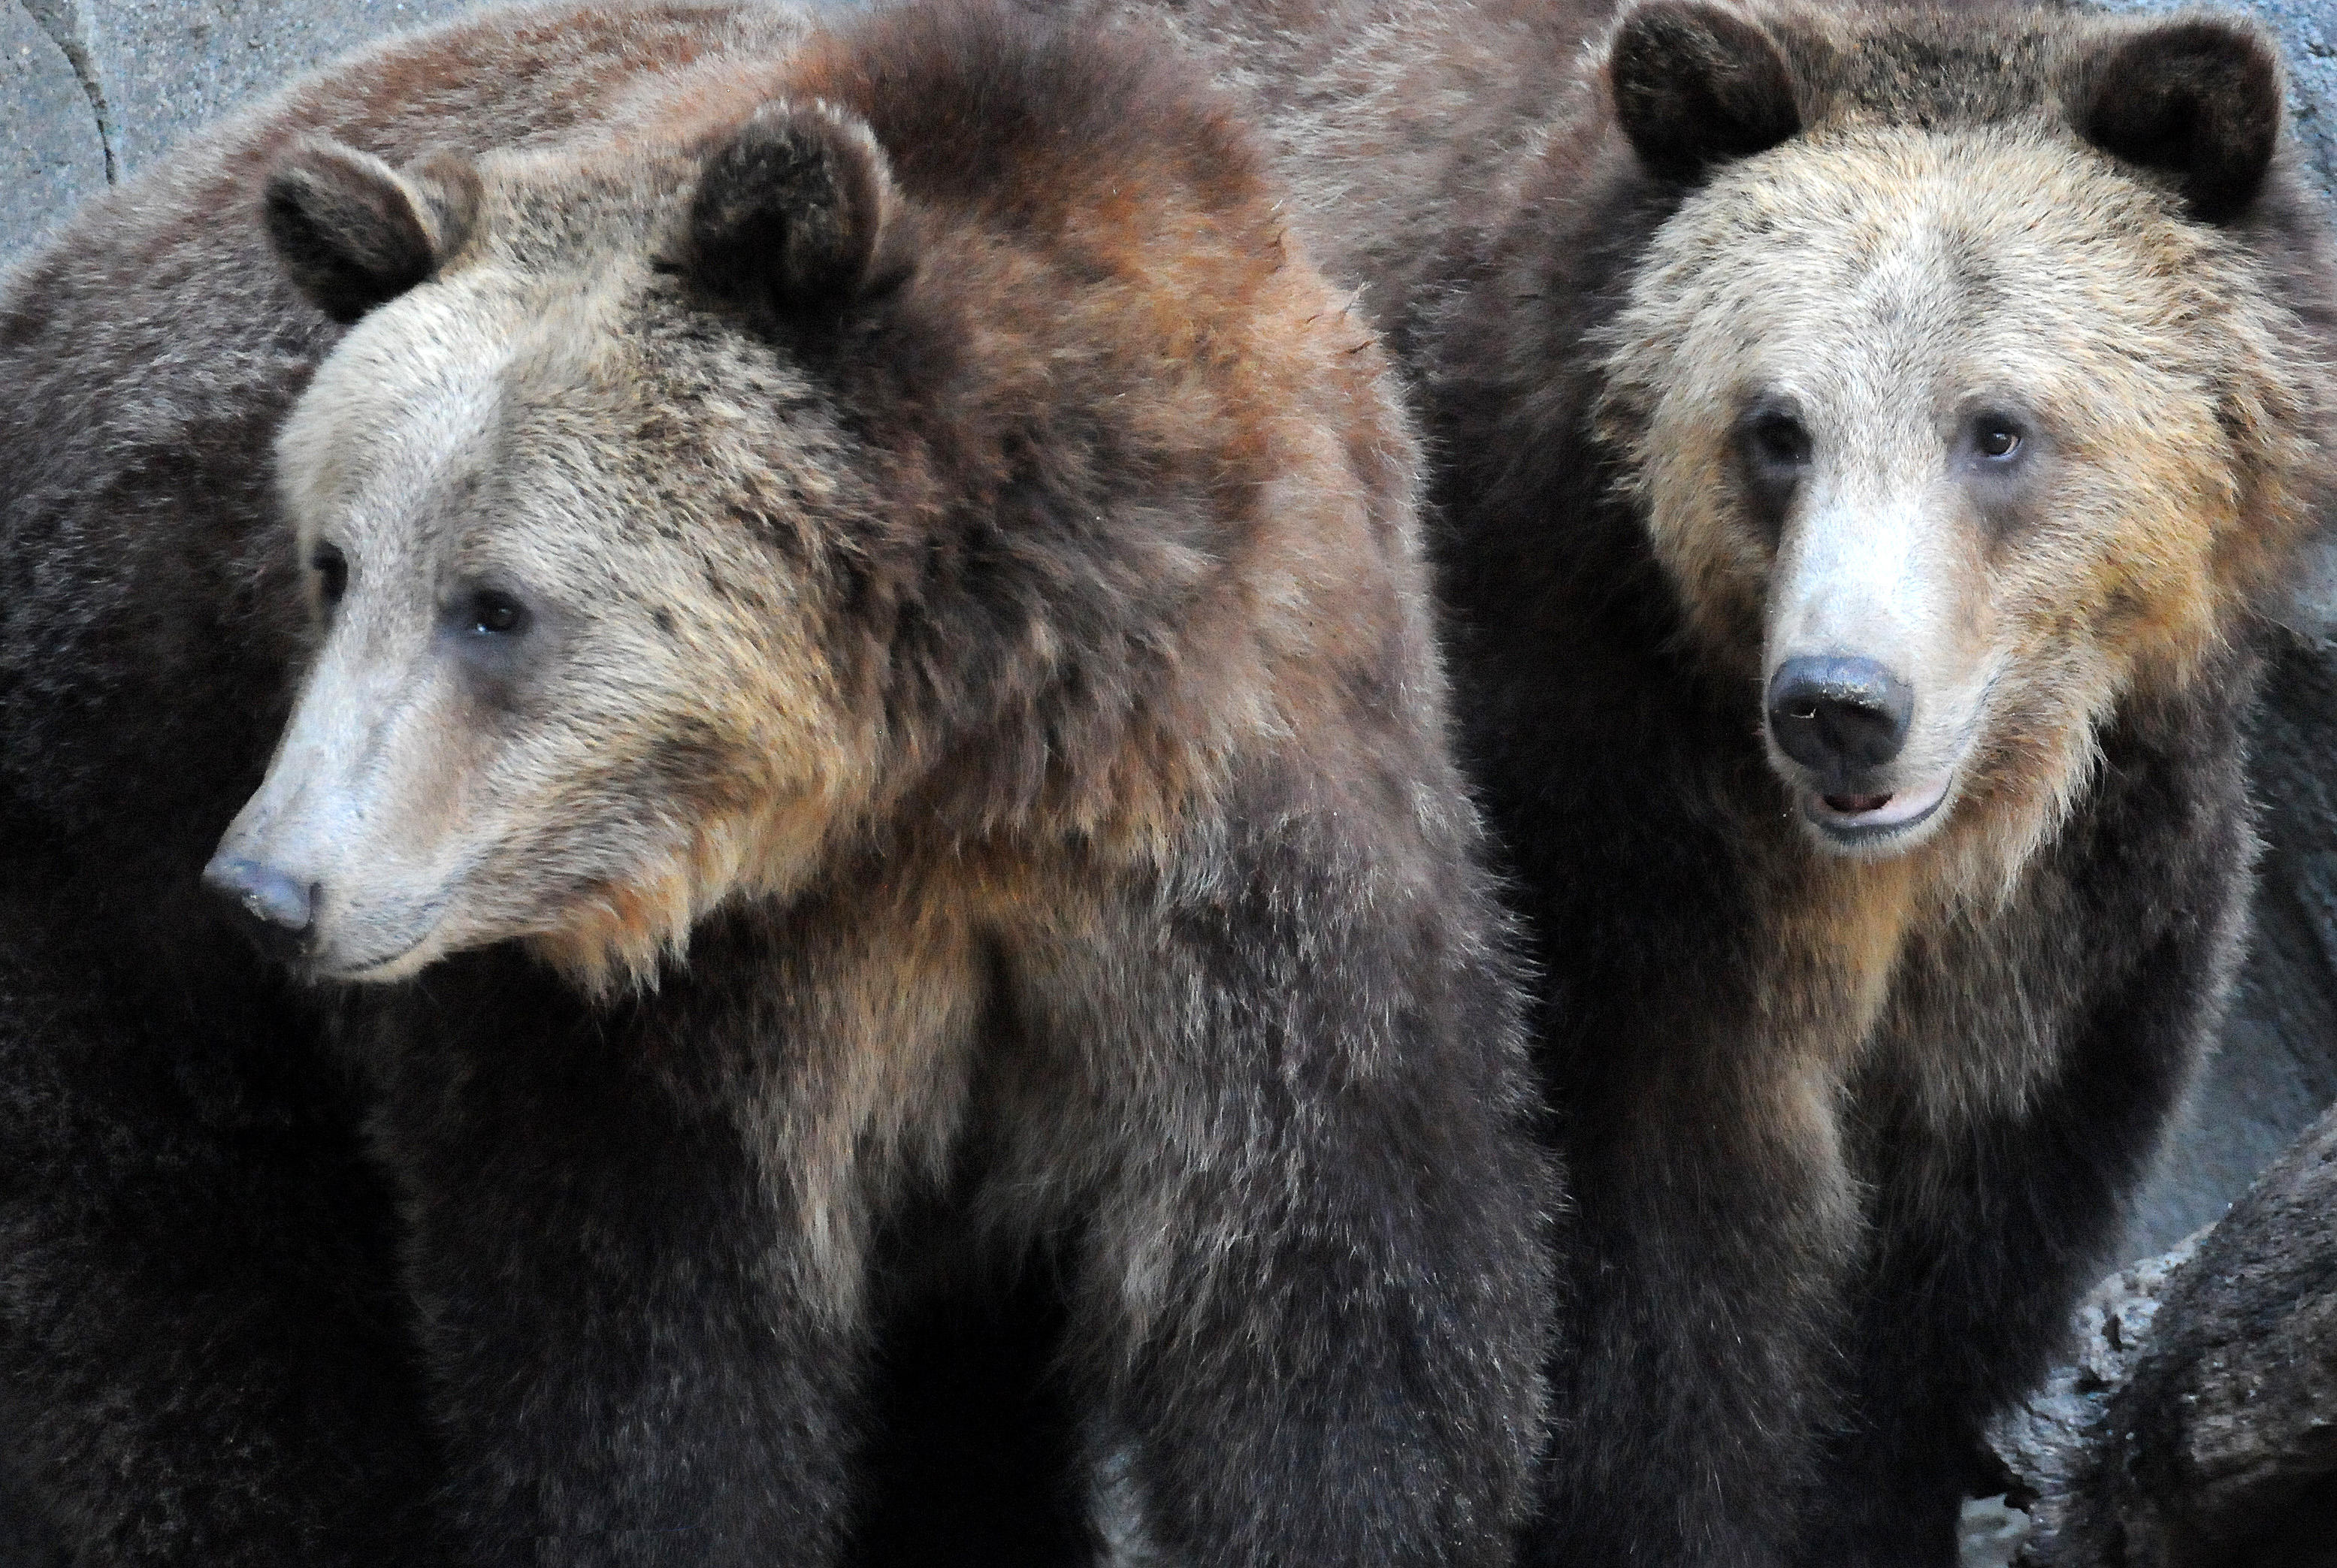 California Brown Bears at Balboa Park Zoo